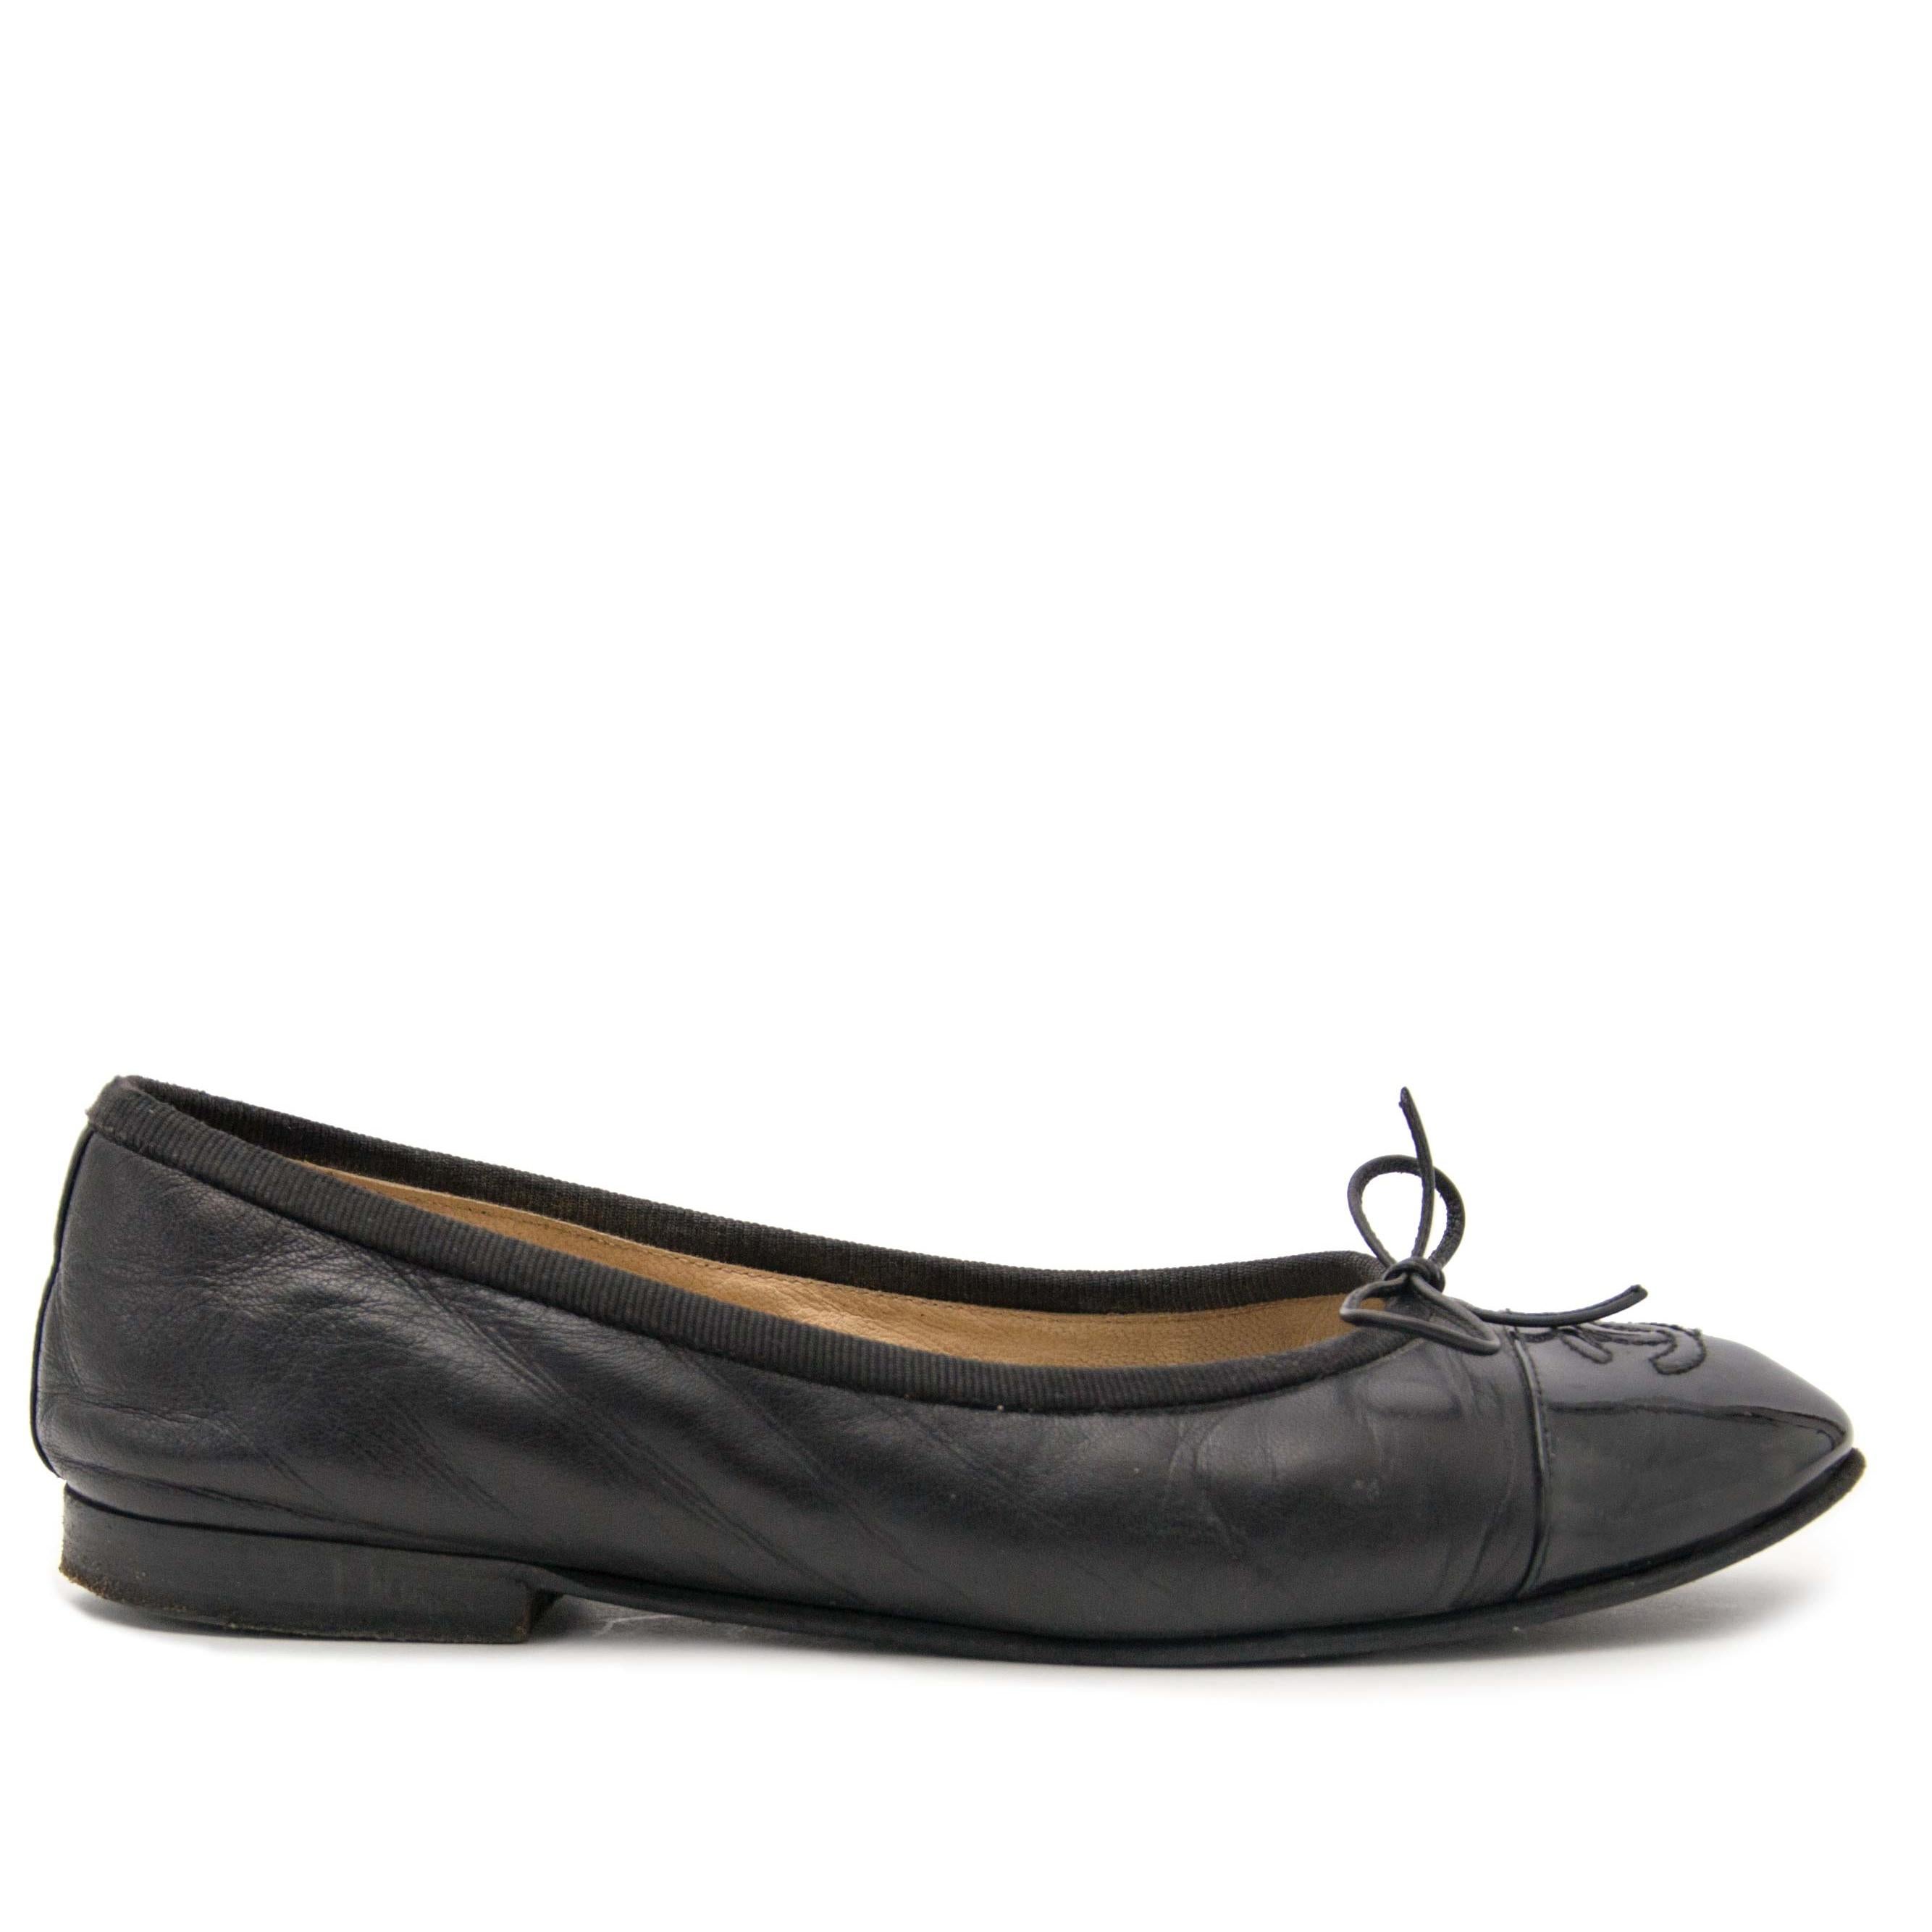 Women's Chanel Black Leather Cap Toe Ballerina Flats - size 35.5